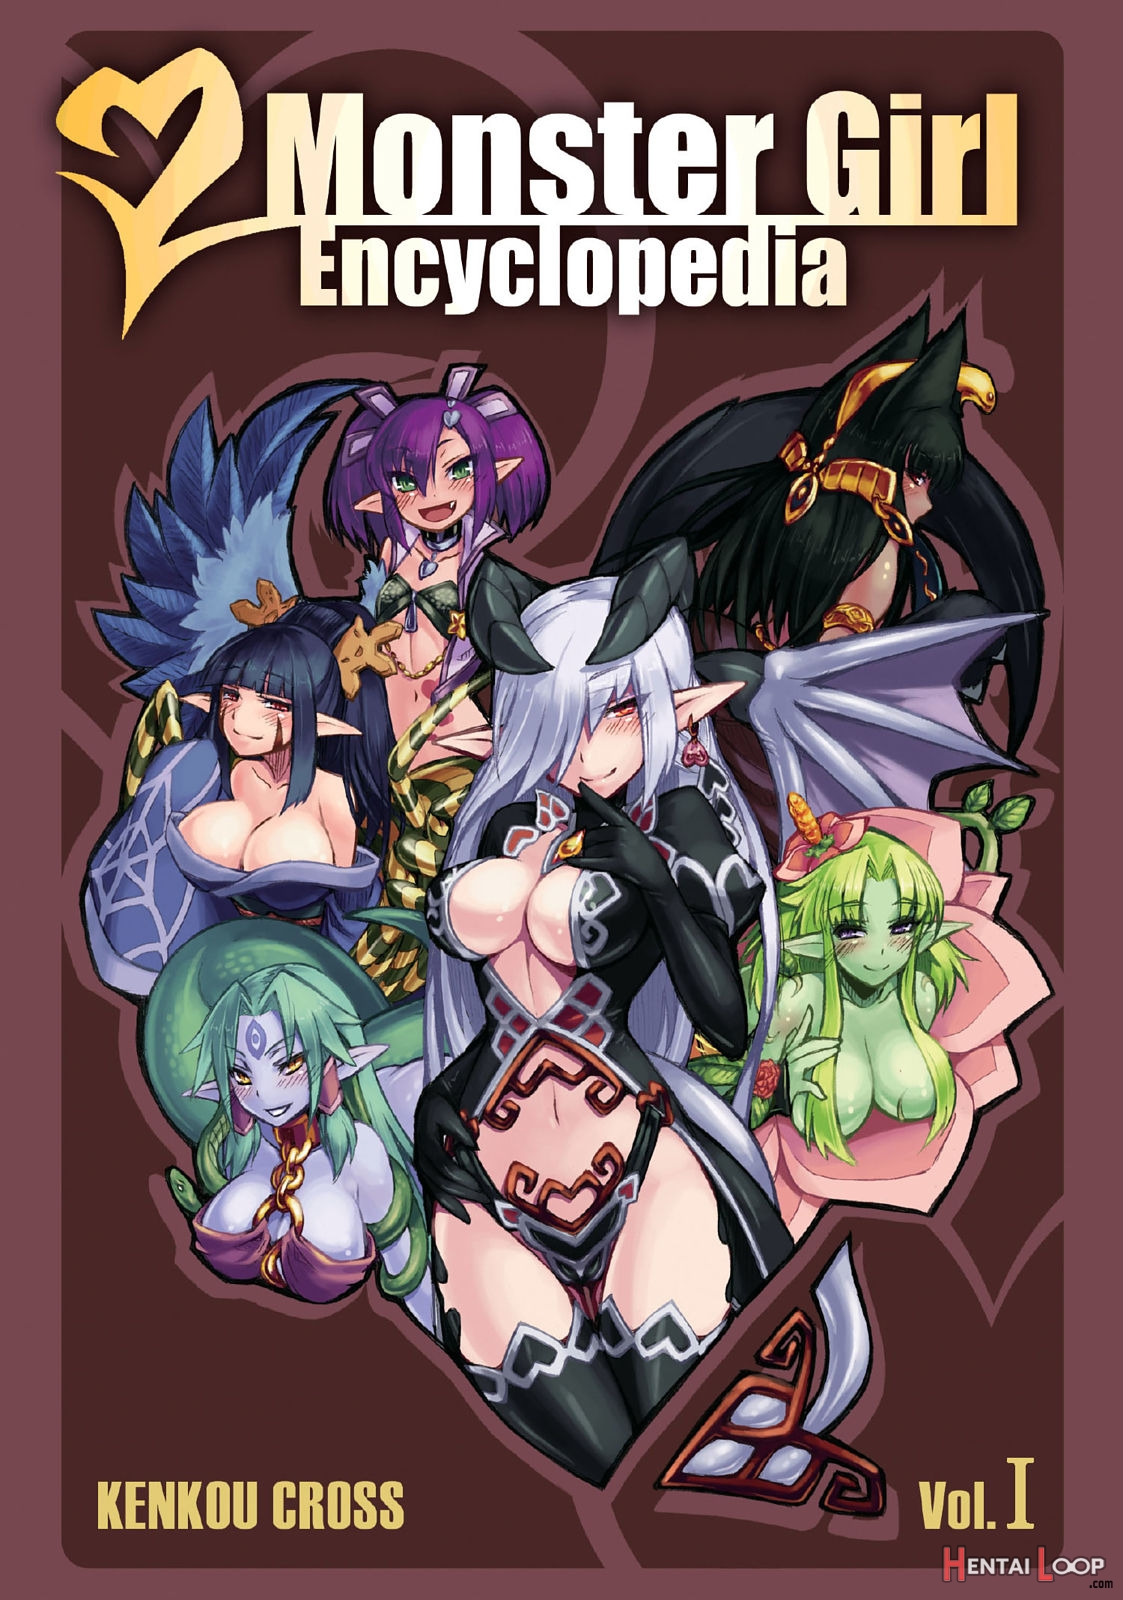 Read Monster Girl Encyclopedia Vol. 1 (by Kenkou Cross) - Hentai doujinshi  for free at HentaiLoop